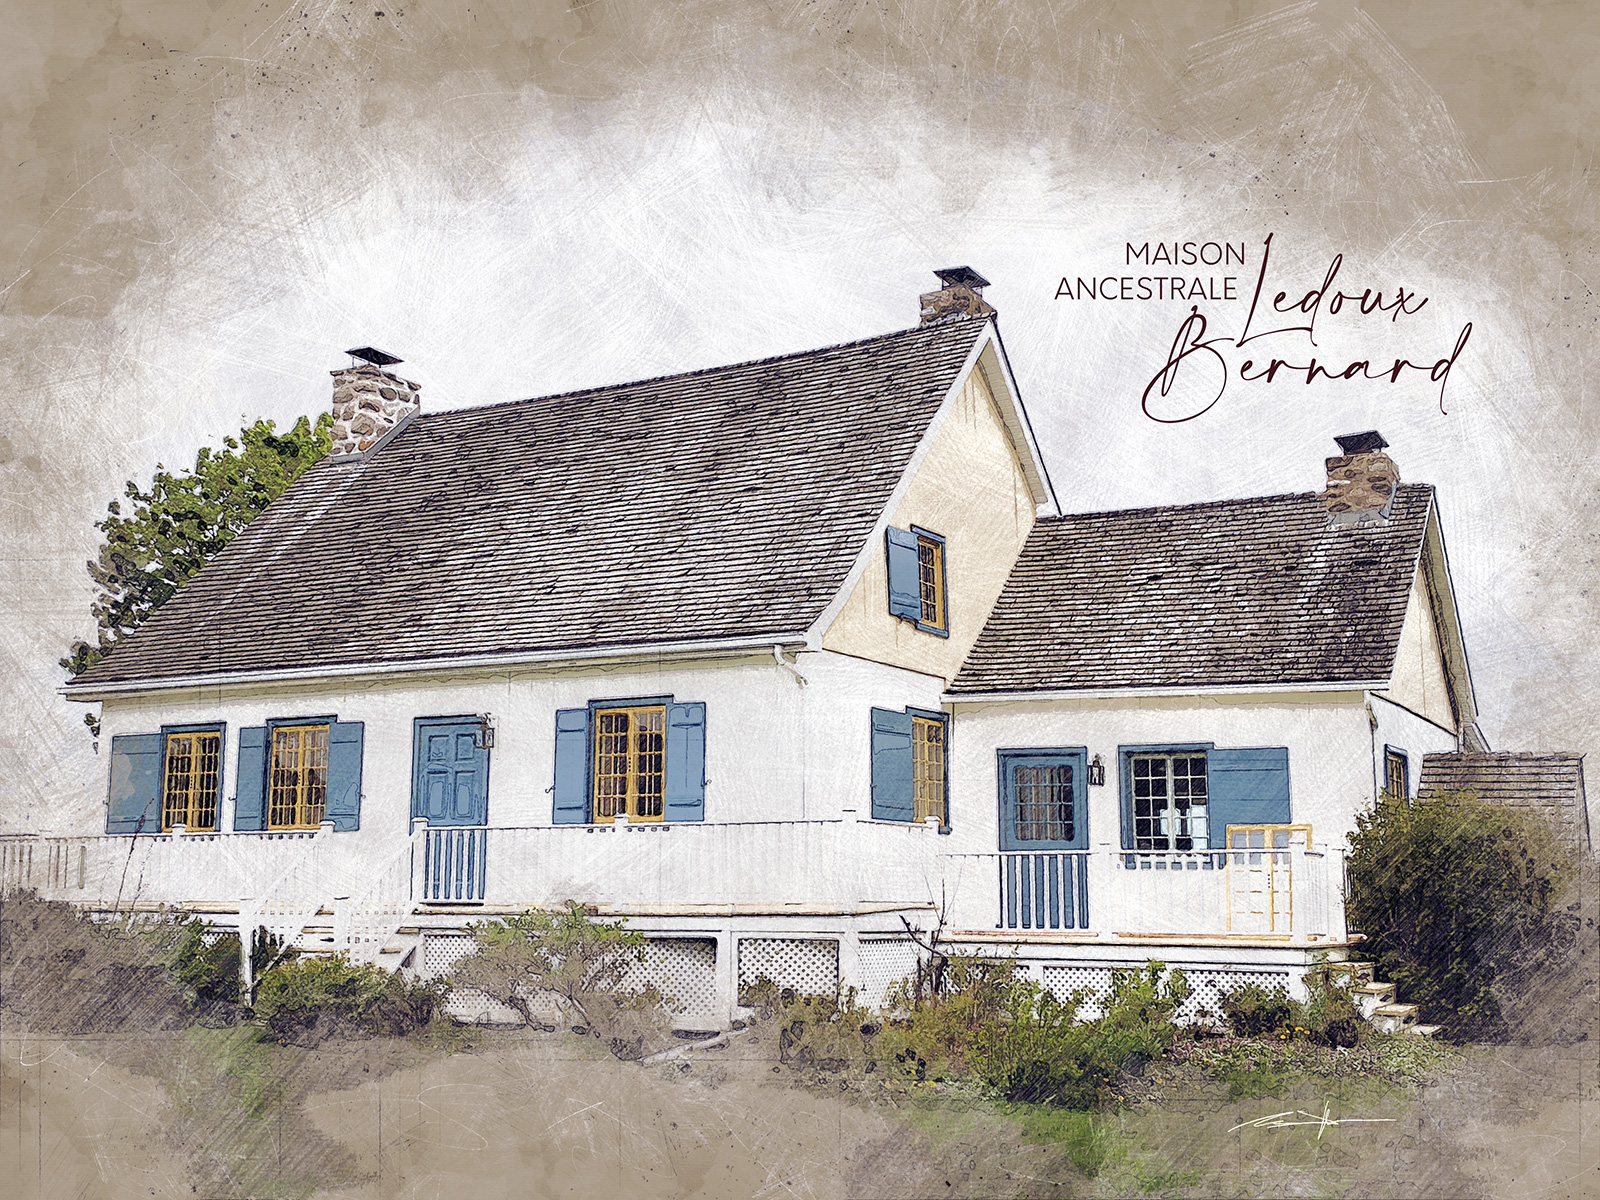 Maison-Ancestrale-Ledoux-Bernard_illust_EJHughes-signature